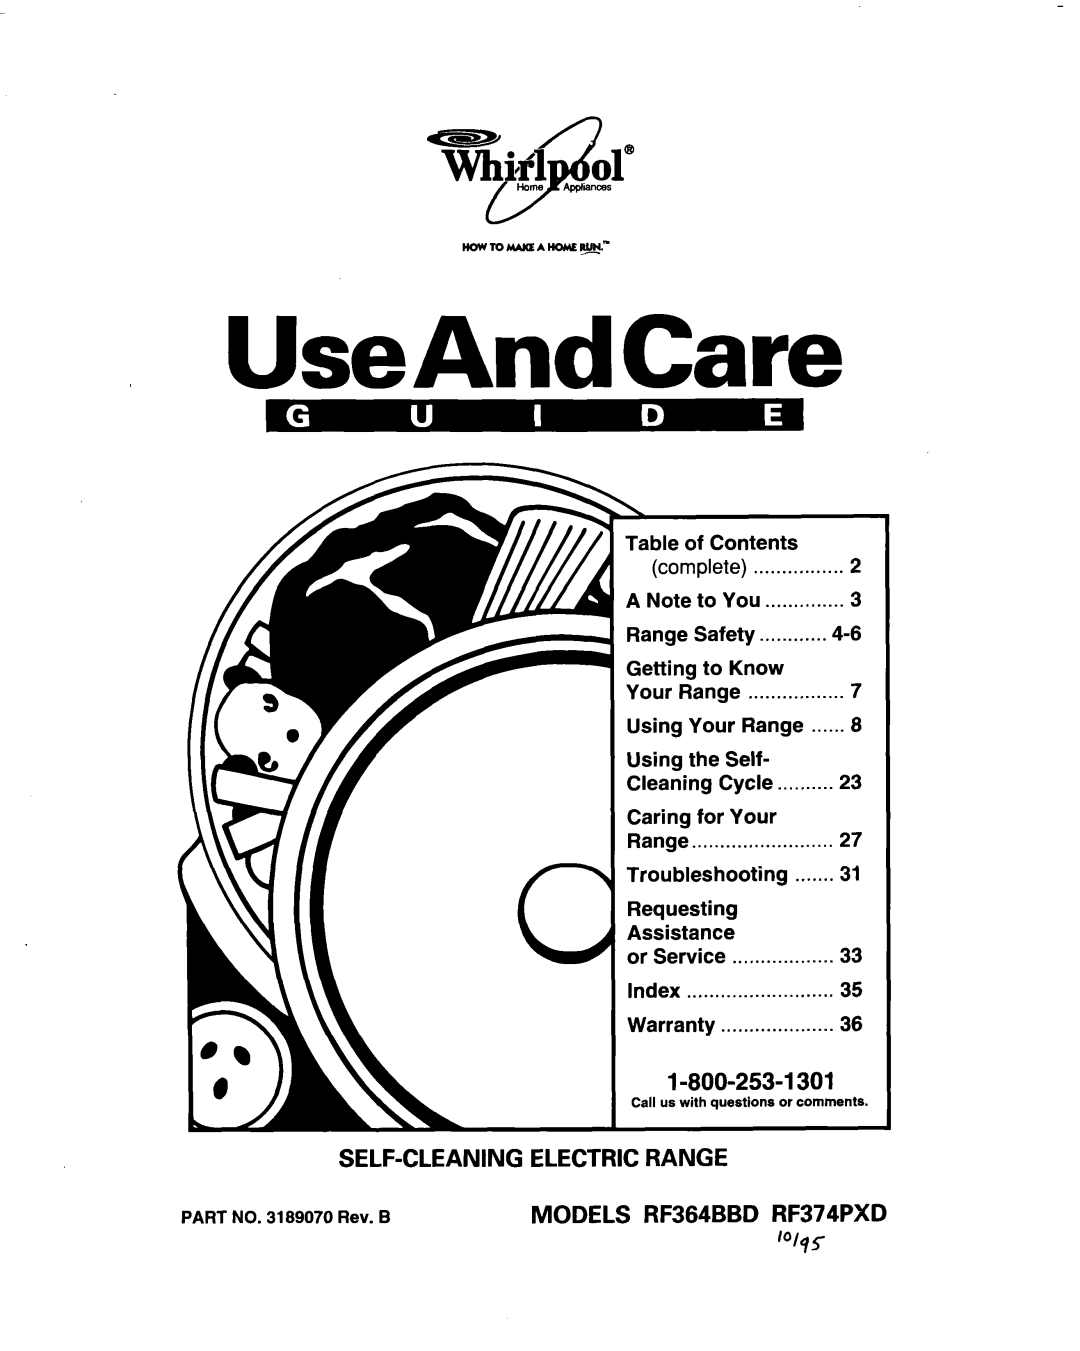 Whirlpool manual UseAndCare, 1-800-253-I301, Self-Cleaningelectric Range, MODELS RF364BBD RF374PXD ‘O/q5 